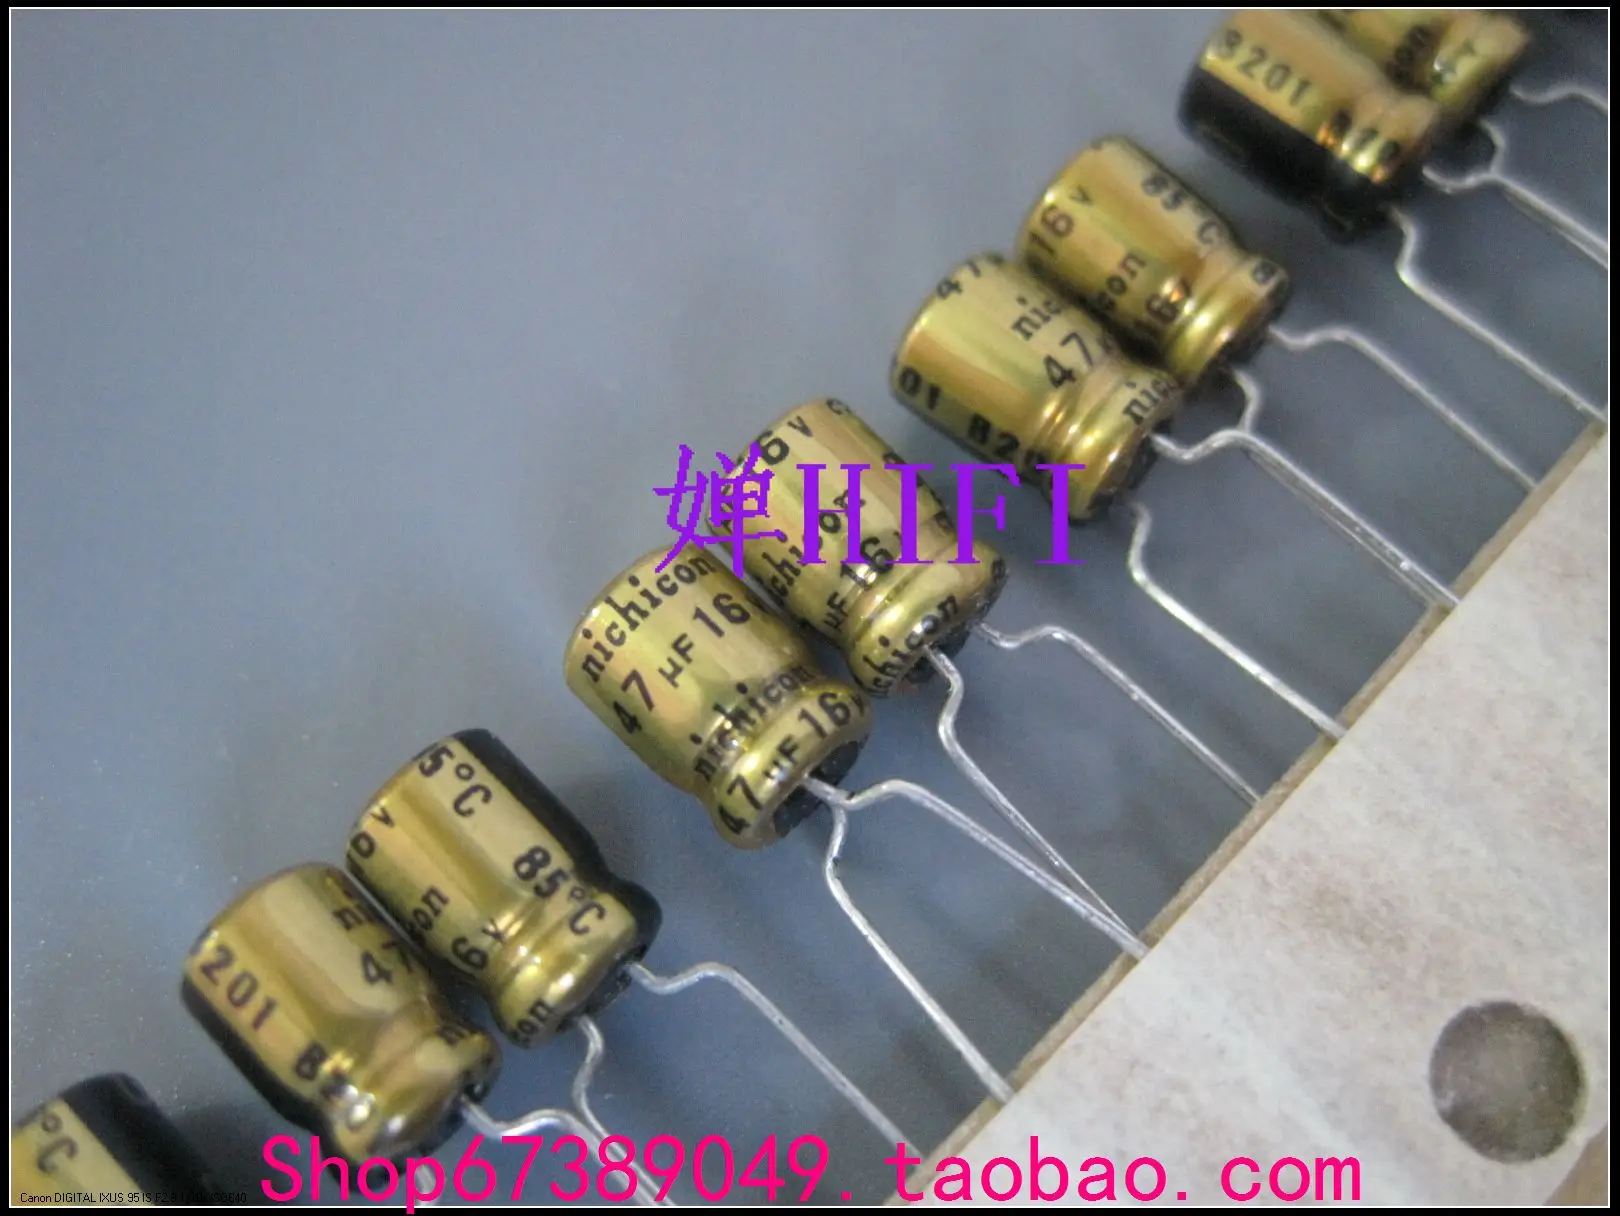 2020 hot sale 20PCS/50PCS Nichicon audio capacitor Japan electrolytic capacitor 16v47uf 5x7mm free shipping